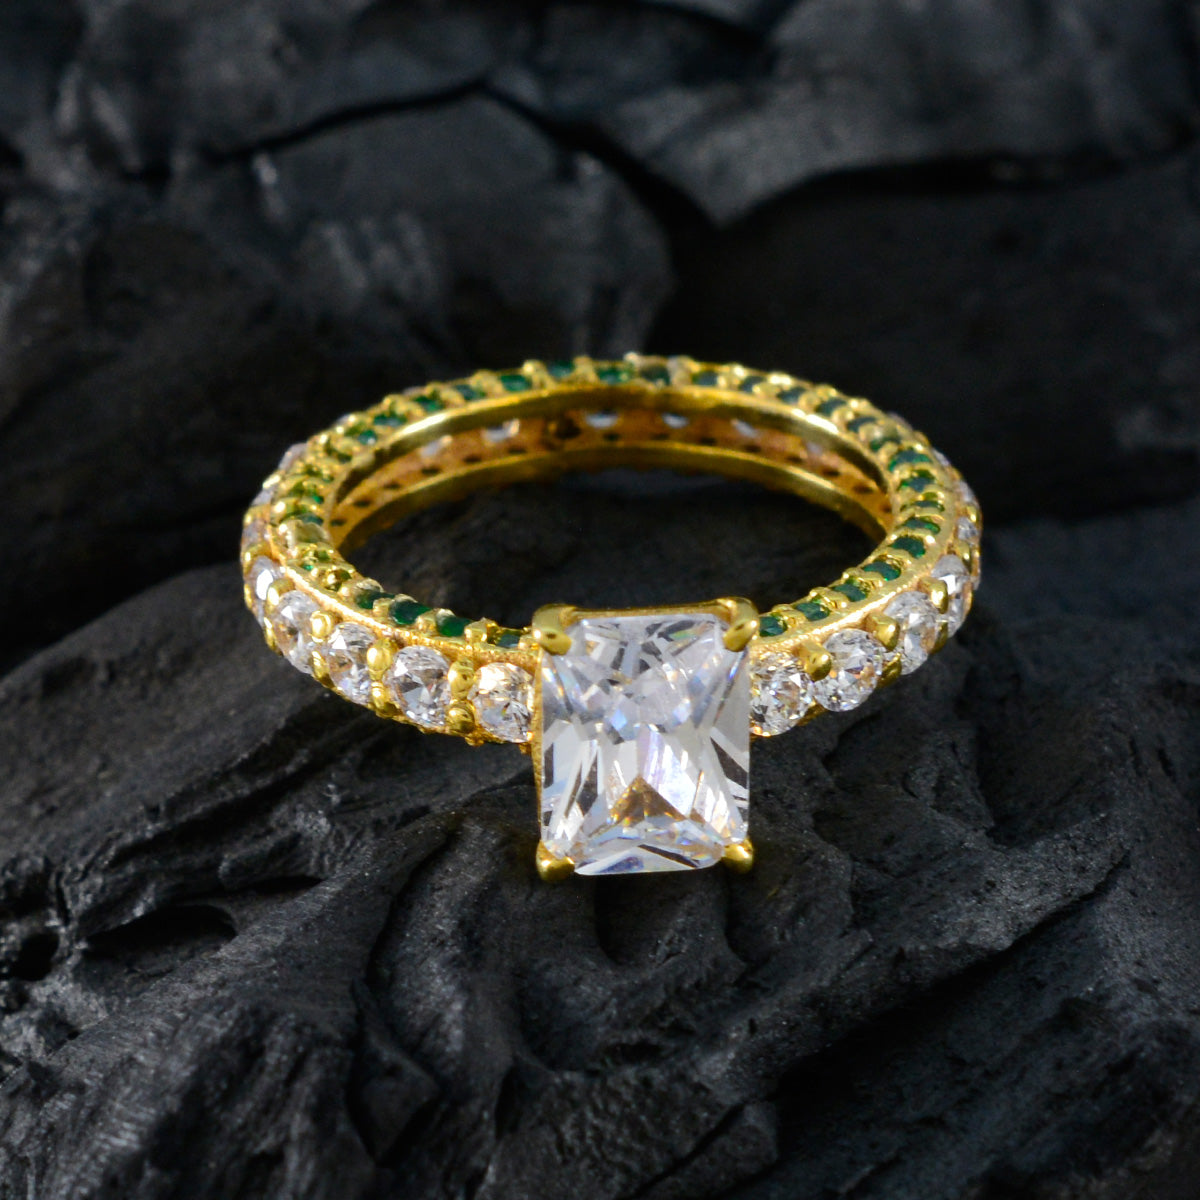 Riyo Gemstone Silver Ring With Yellow Gold Plating Emerald CZ Stone Octagon Shape Prong Setting Handamde Jewelry Black Friday Ring